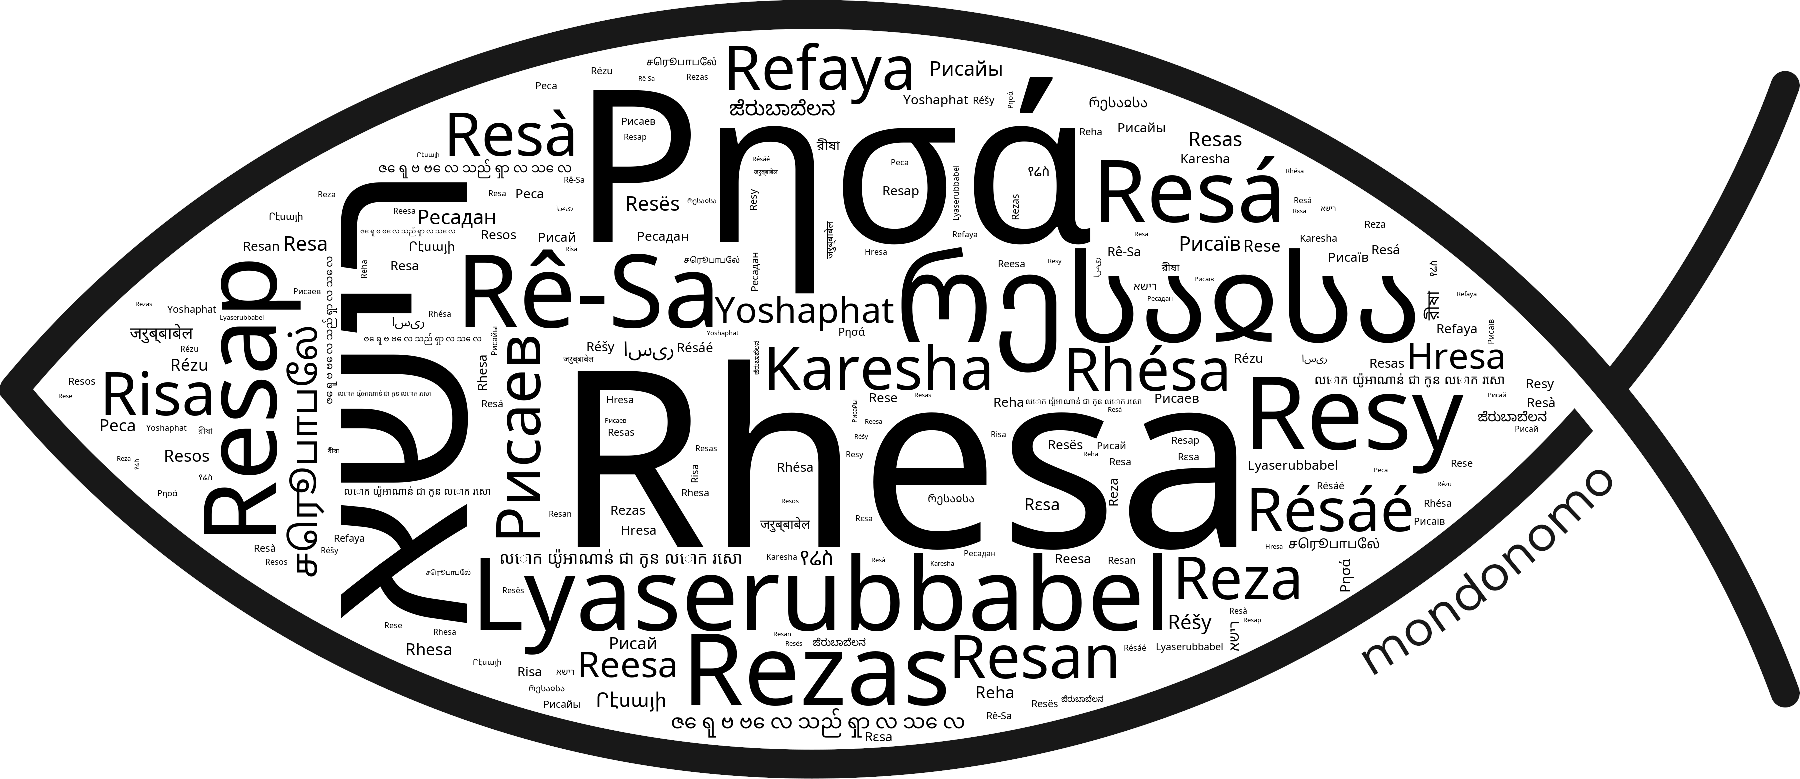 Name Rhesa in the world's Bibles